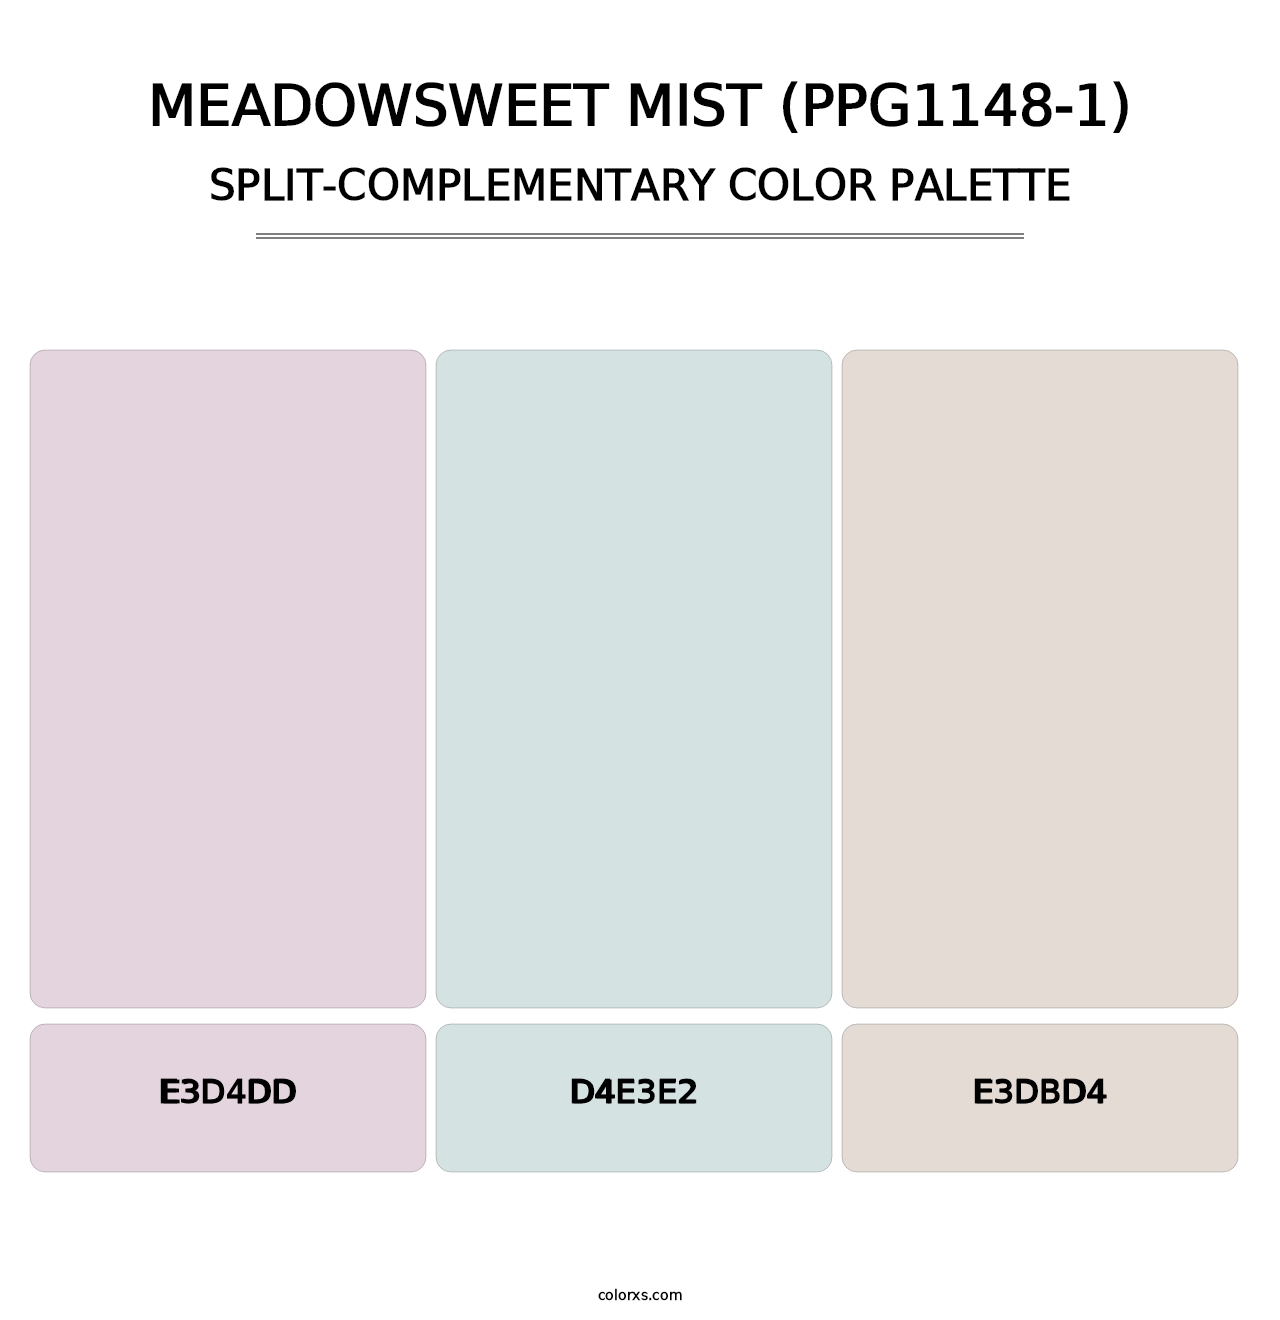 Meadowsweet Mist (PPG1148-1) - Split-Complementary Color Palette